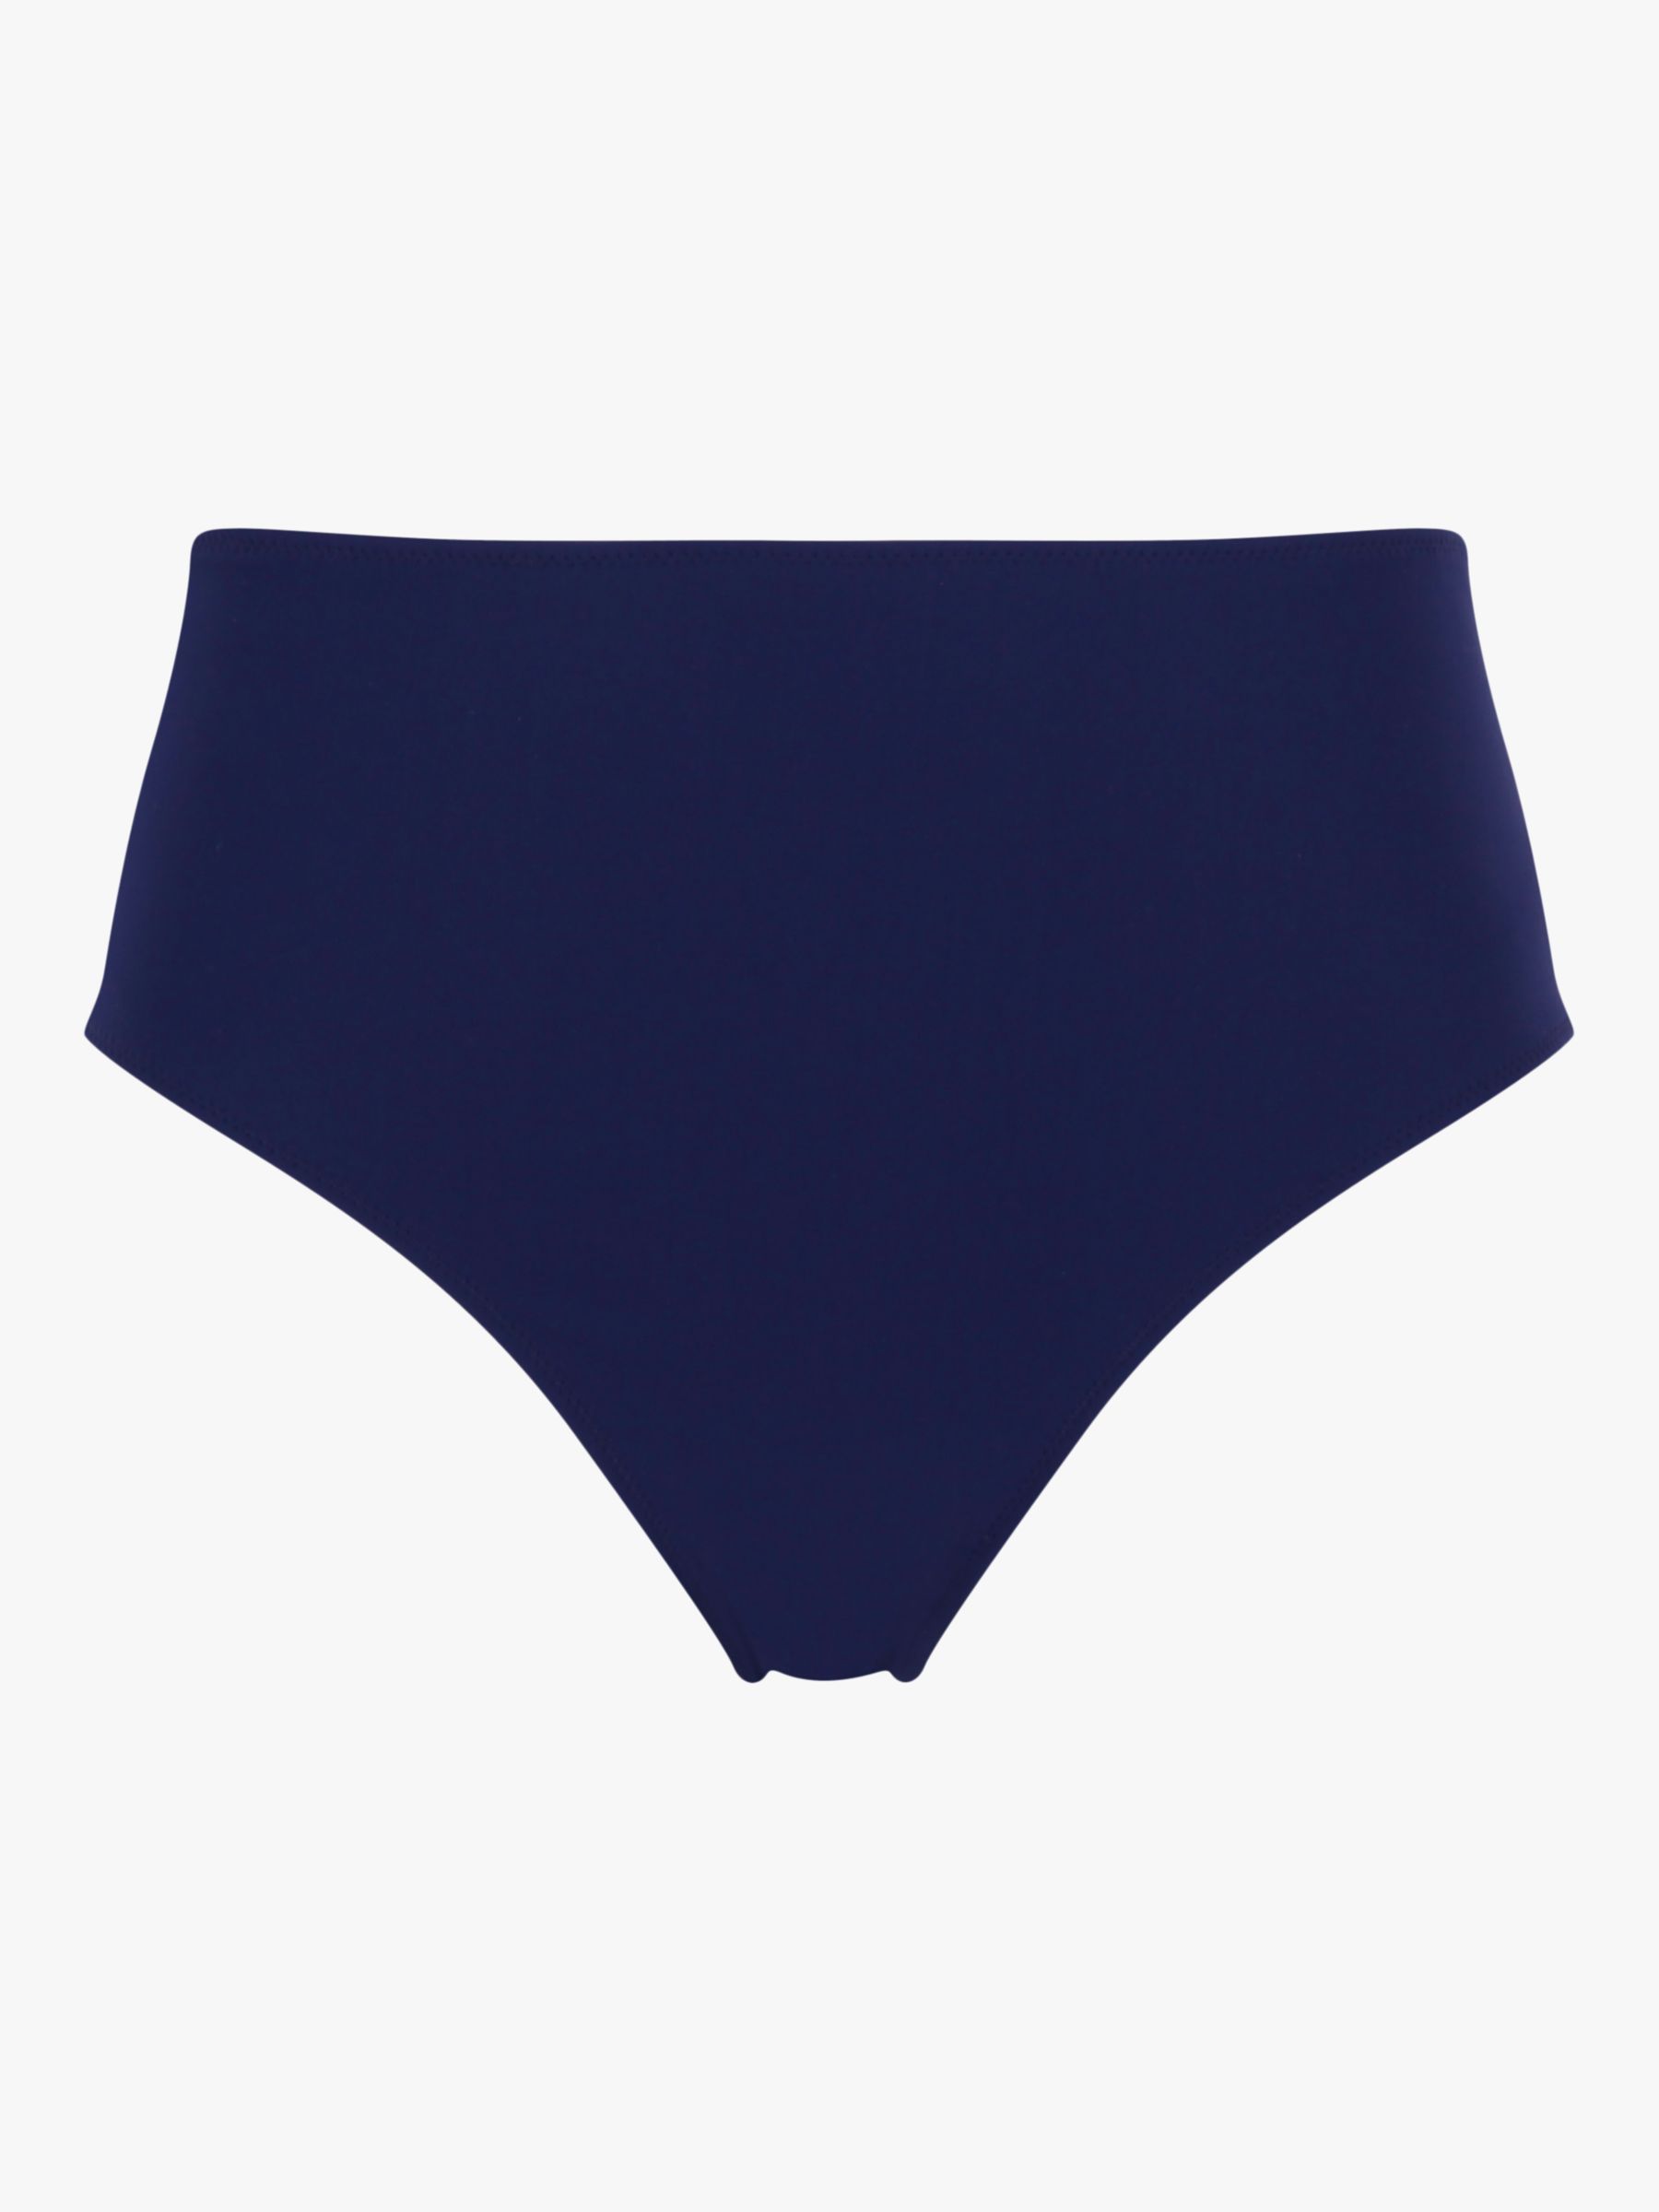 Panache High Waist Bikini Bottoms, Azzuro Navy, 10